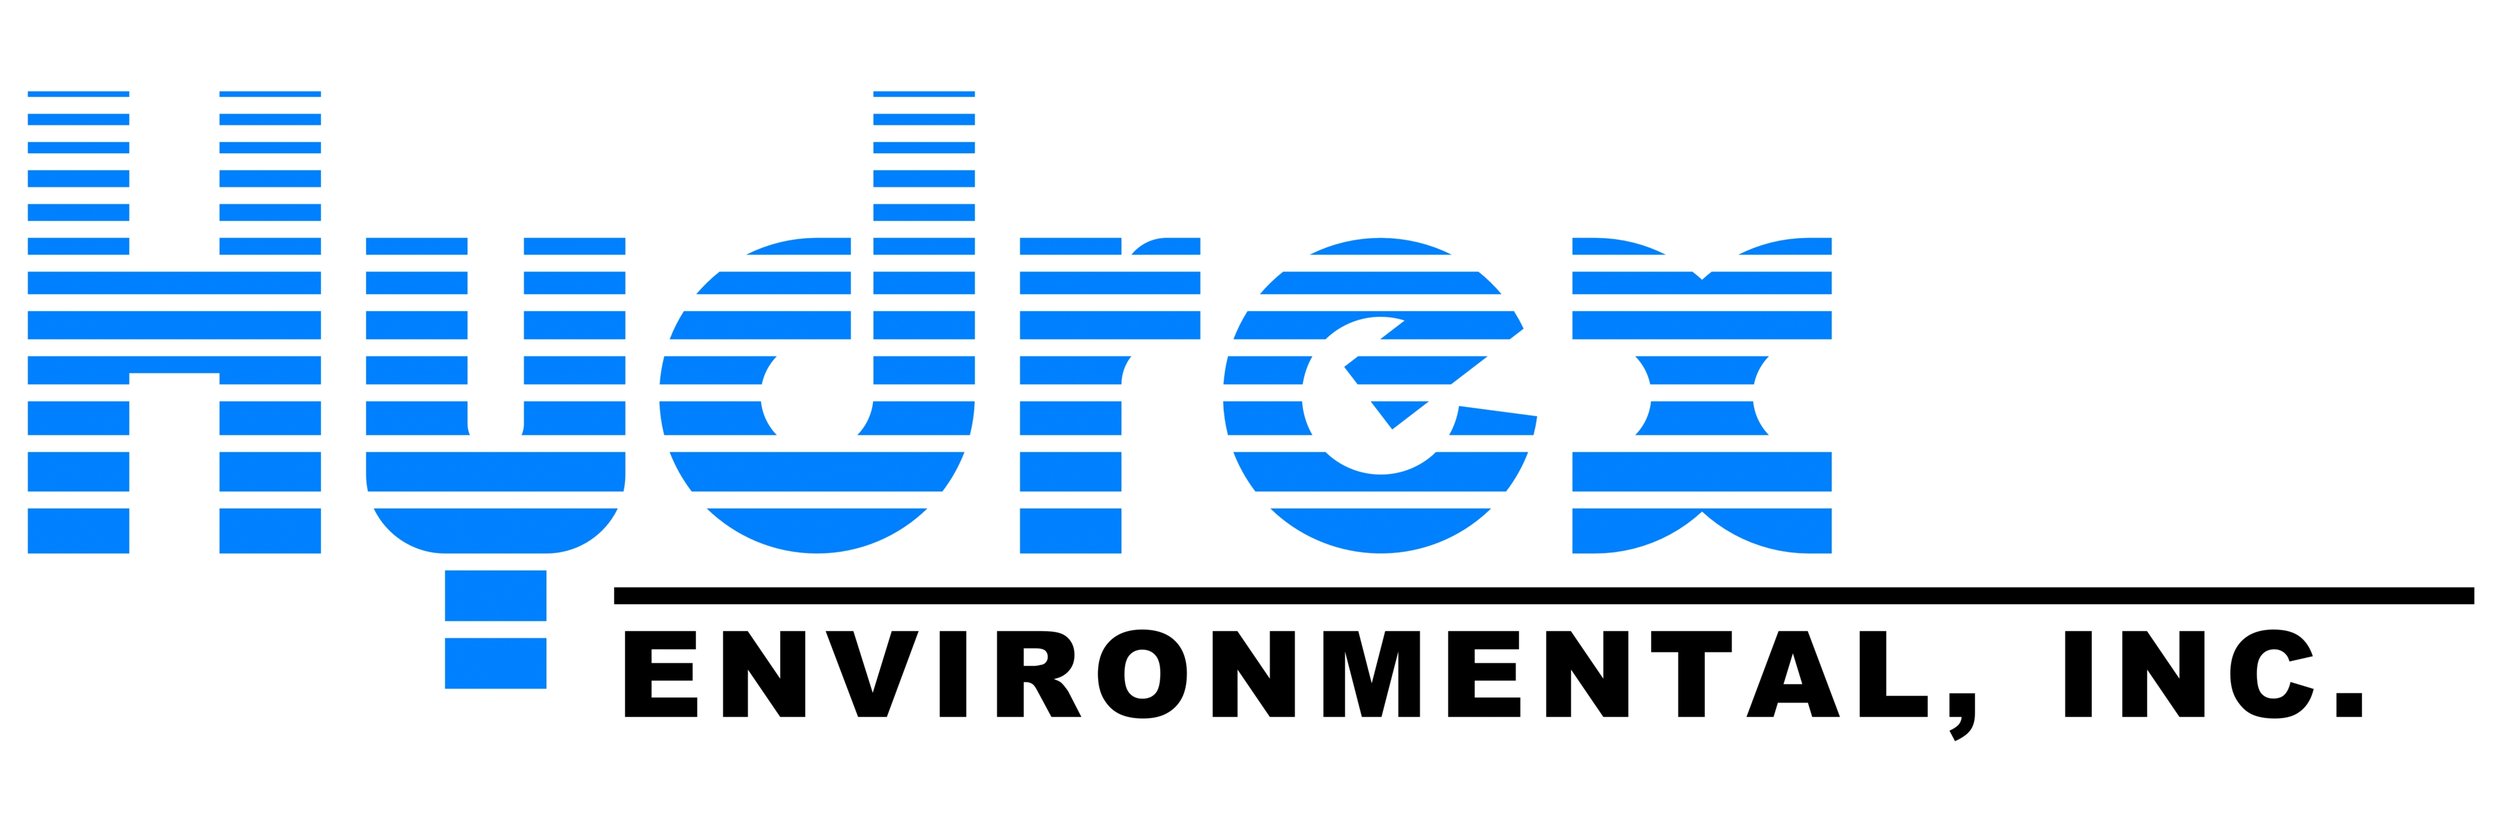 Hydrex environmental logo.jpeg